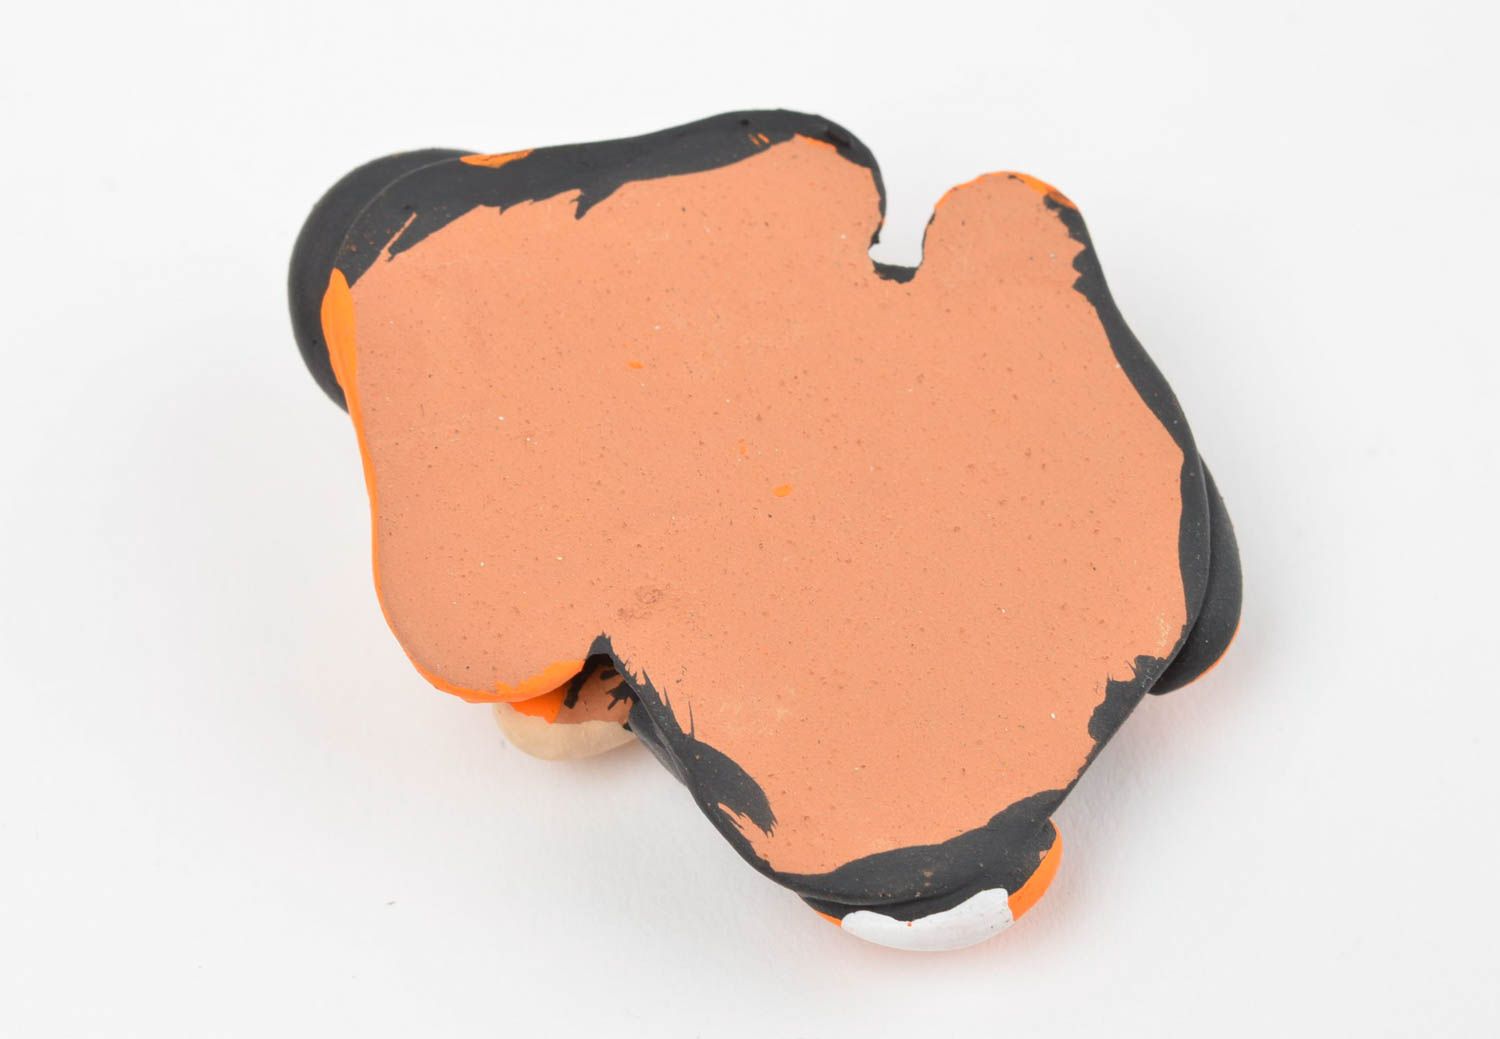 Calamita da frigorifero fatta a mano souvenir in ceramica a forma di cane foto 4